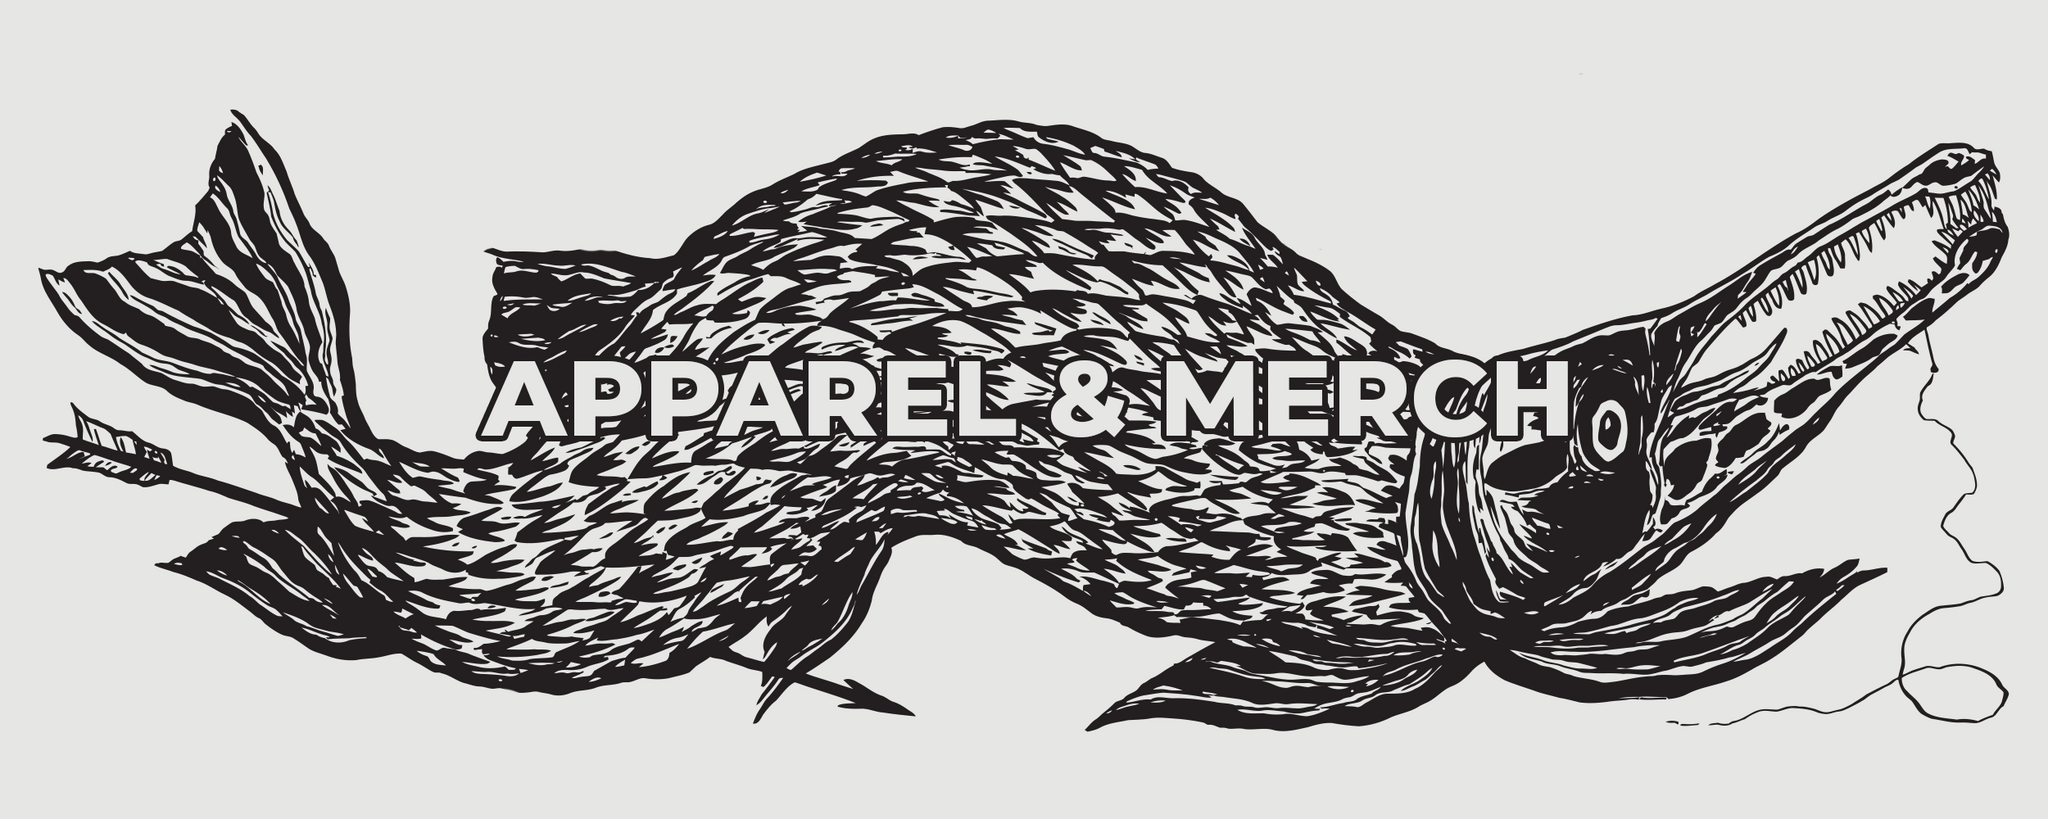 Apparel & Merch